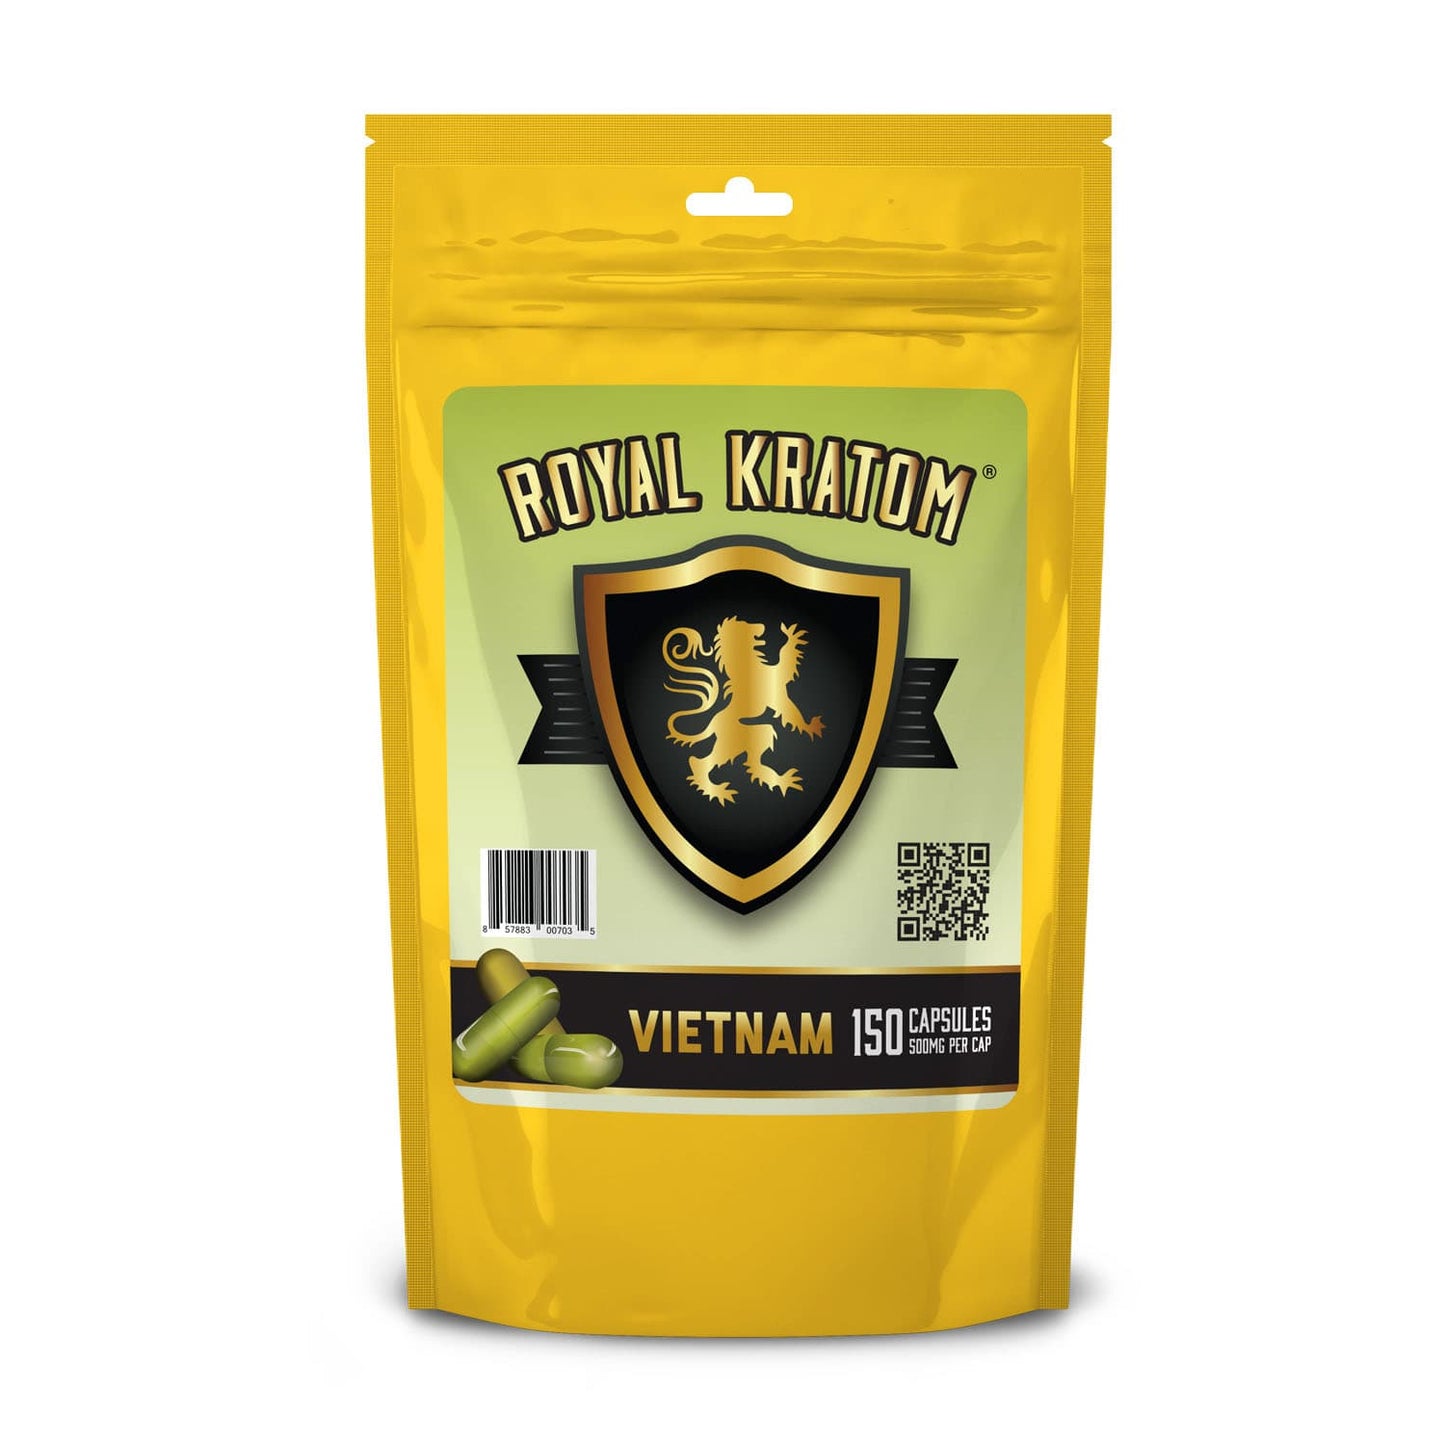 Vietnam Kratom Capsules 150 Count front of package